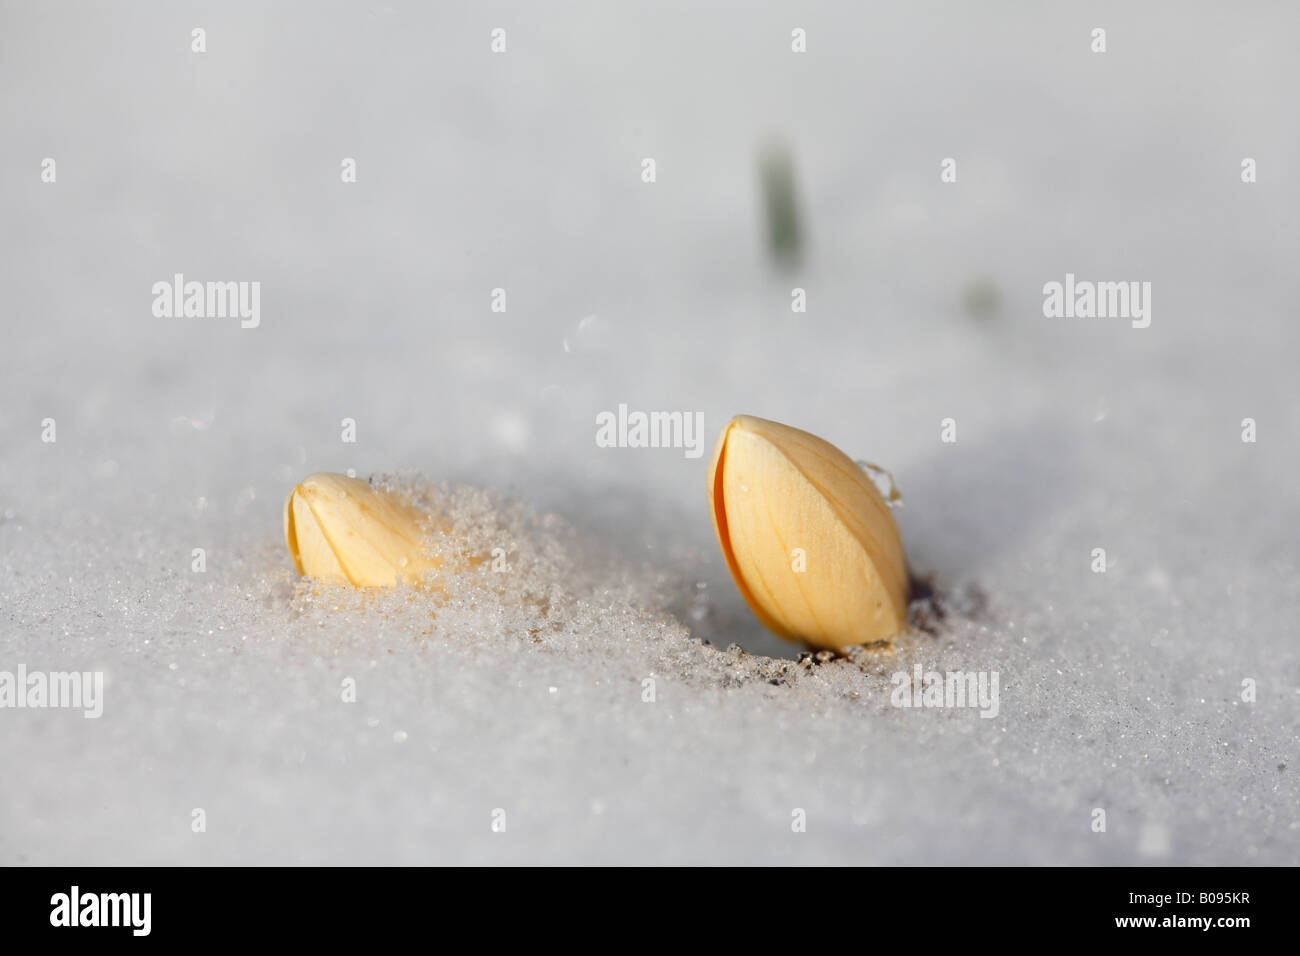 Crocus buds peeking through the snow, Germany Stock Photo